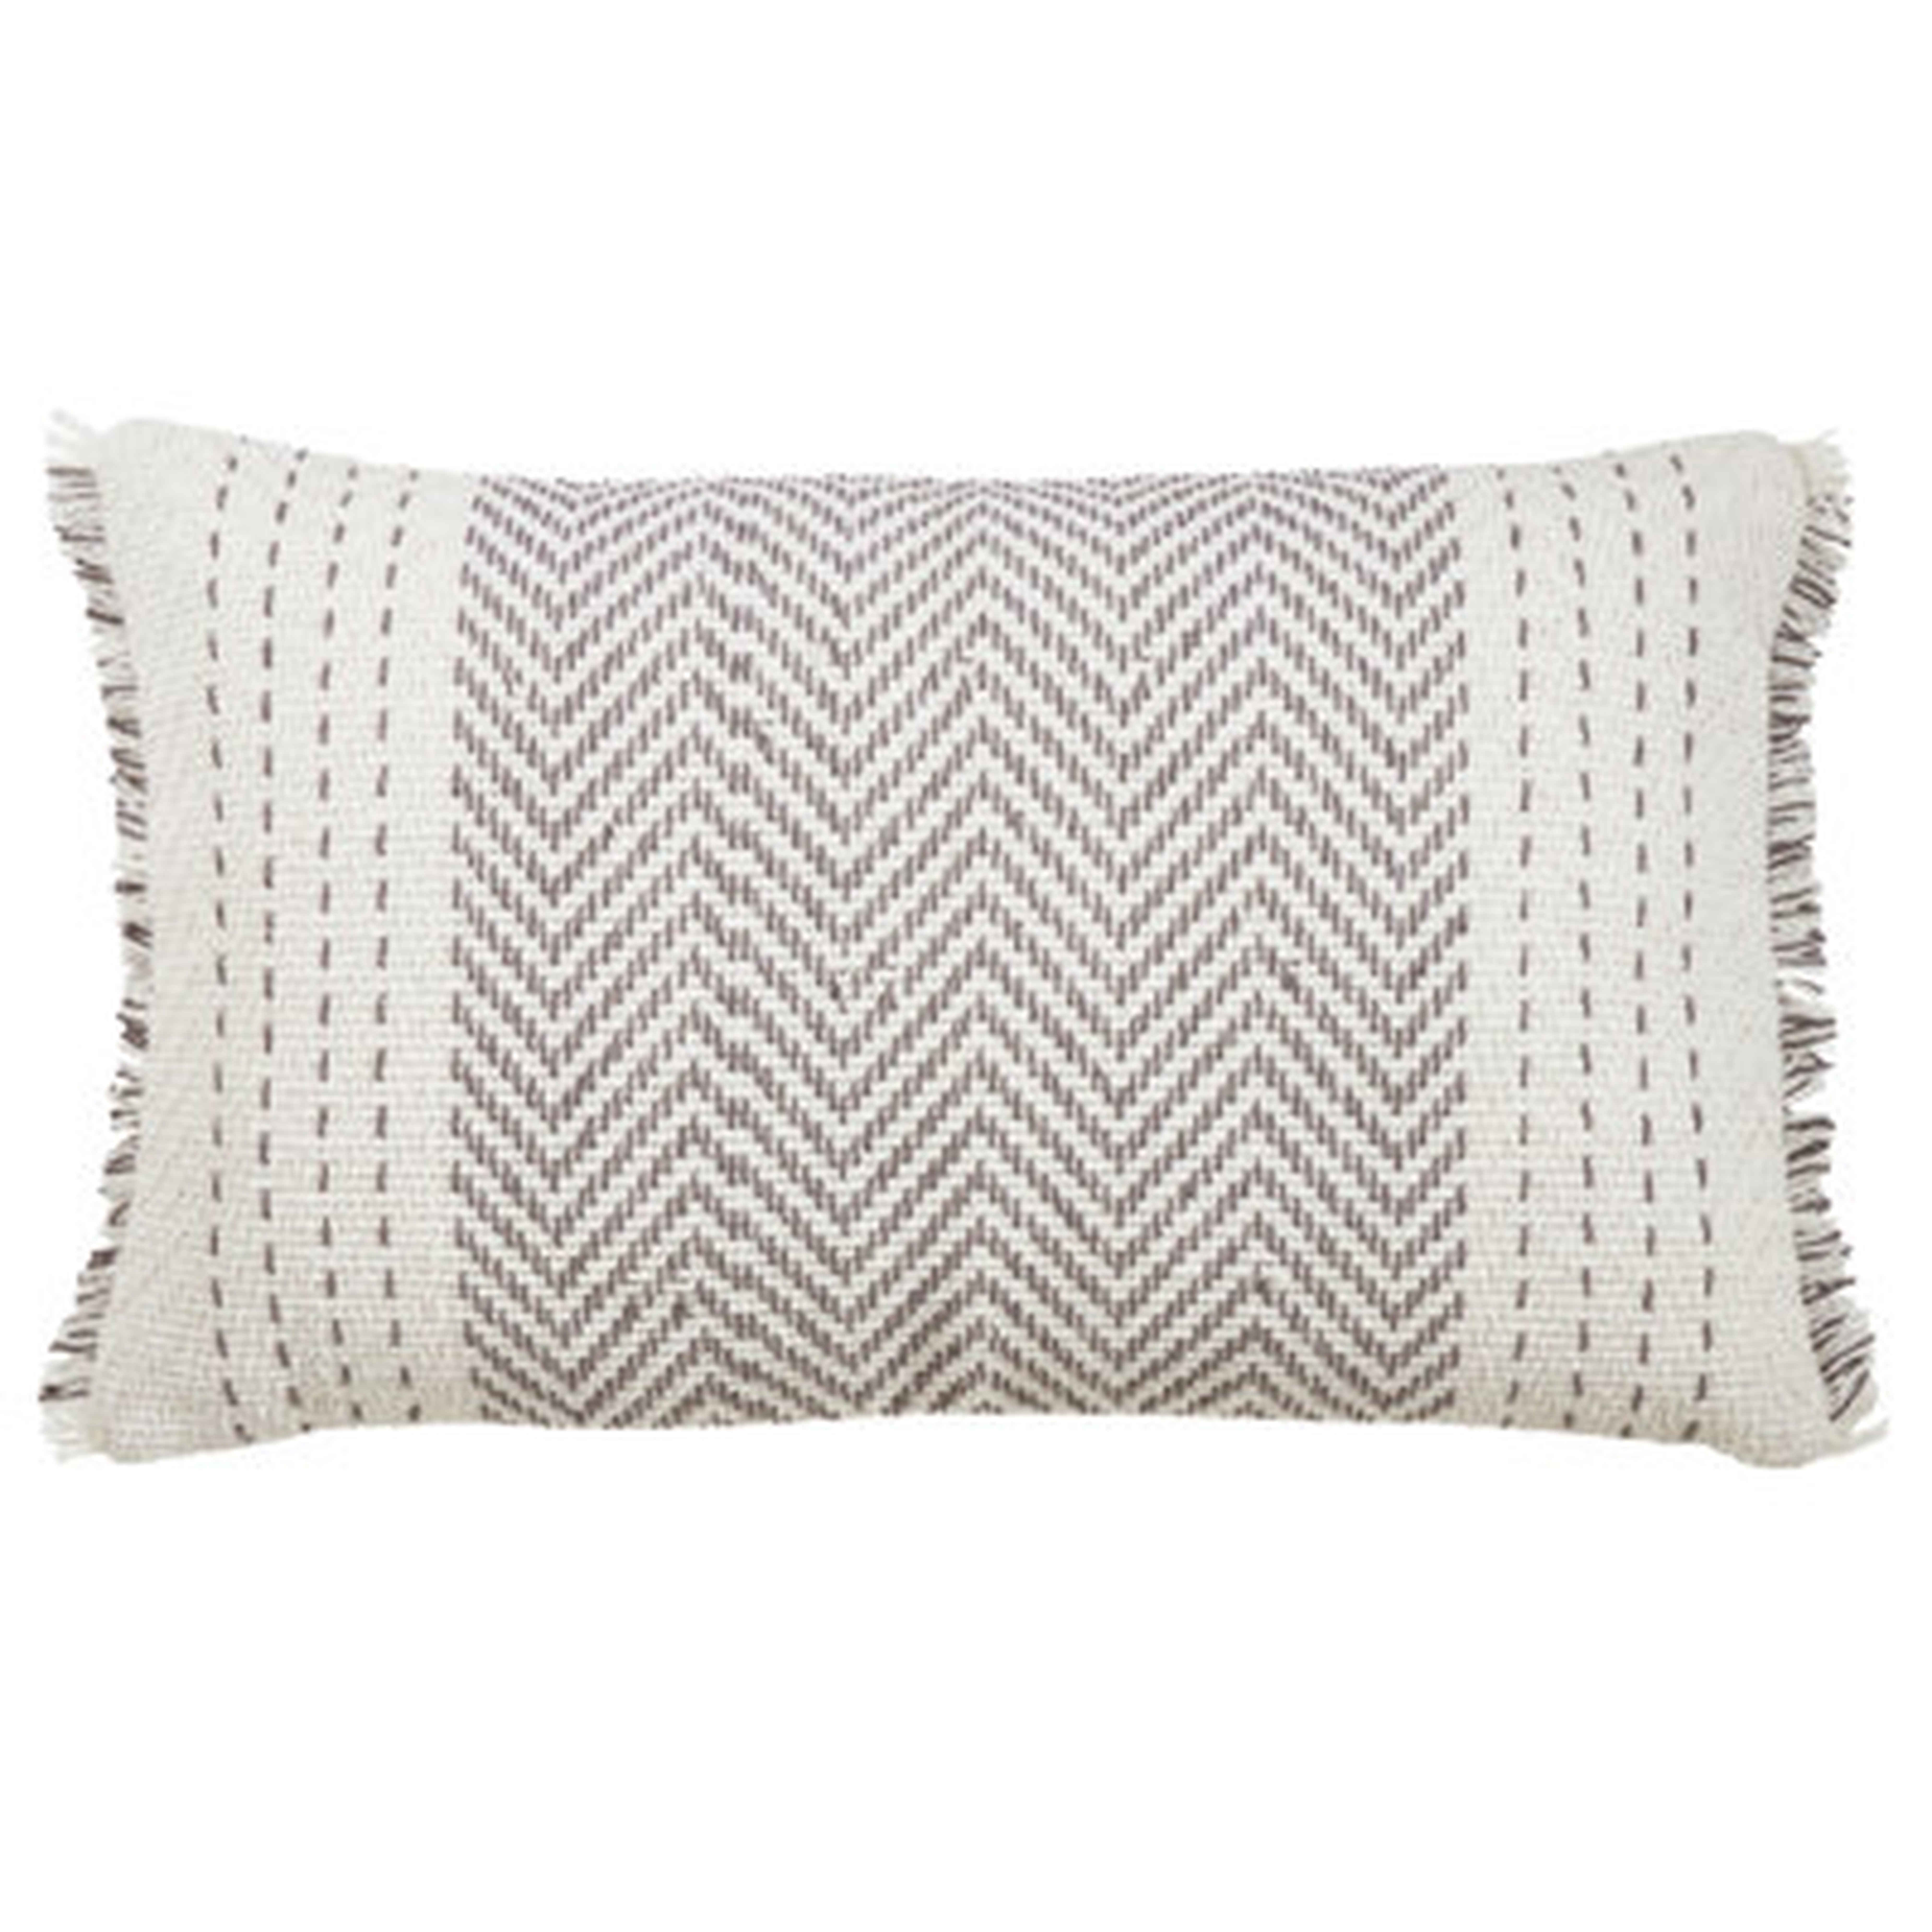 Carey Kantha Stitch Throw Pillow, Cover Only - Wayfair